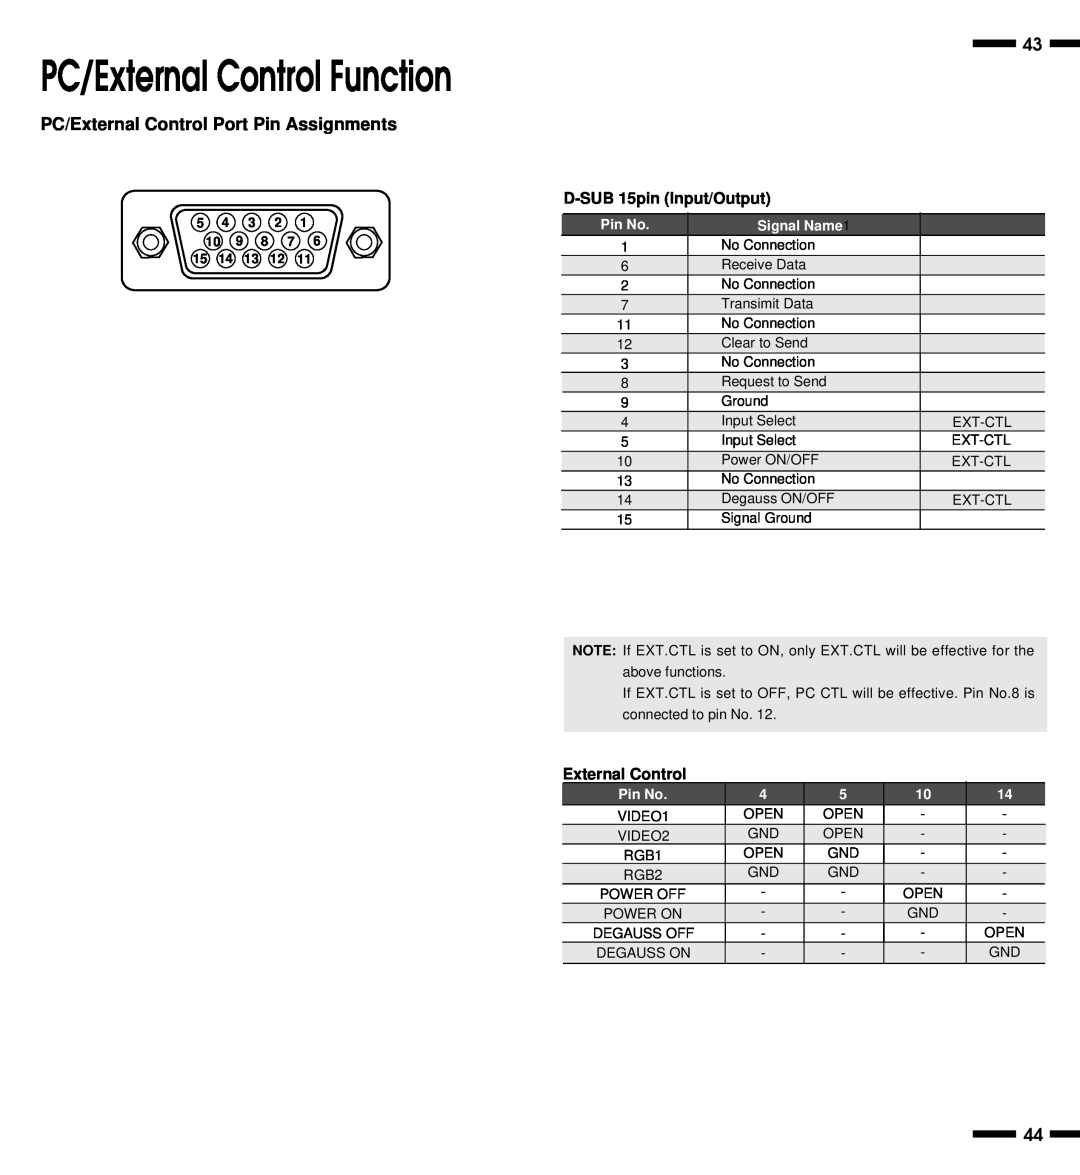 NEC XP29 Plus, XM29 Plus PC/External Control Port Pin Assignments, D-SUB15pin Input/Output, PC/External Control Function 